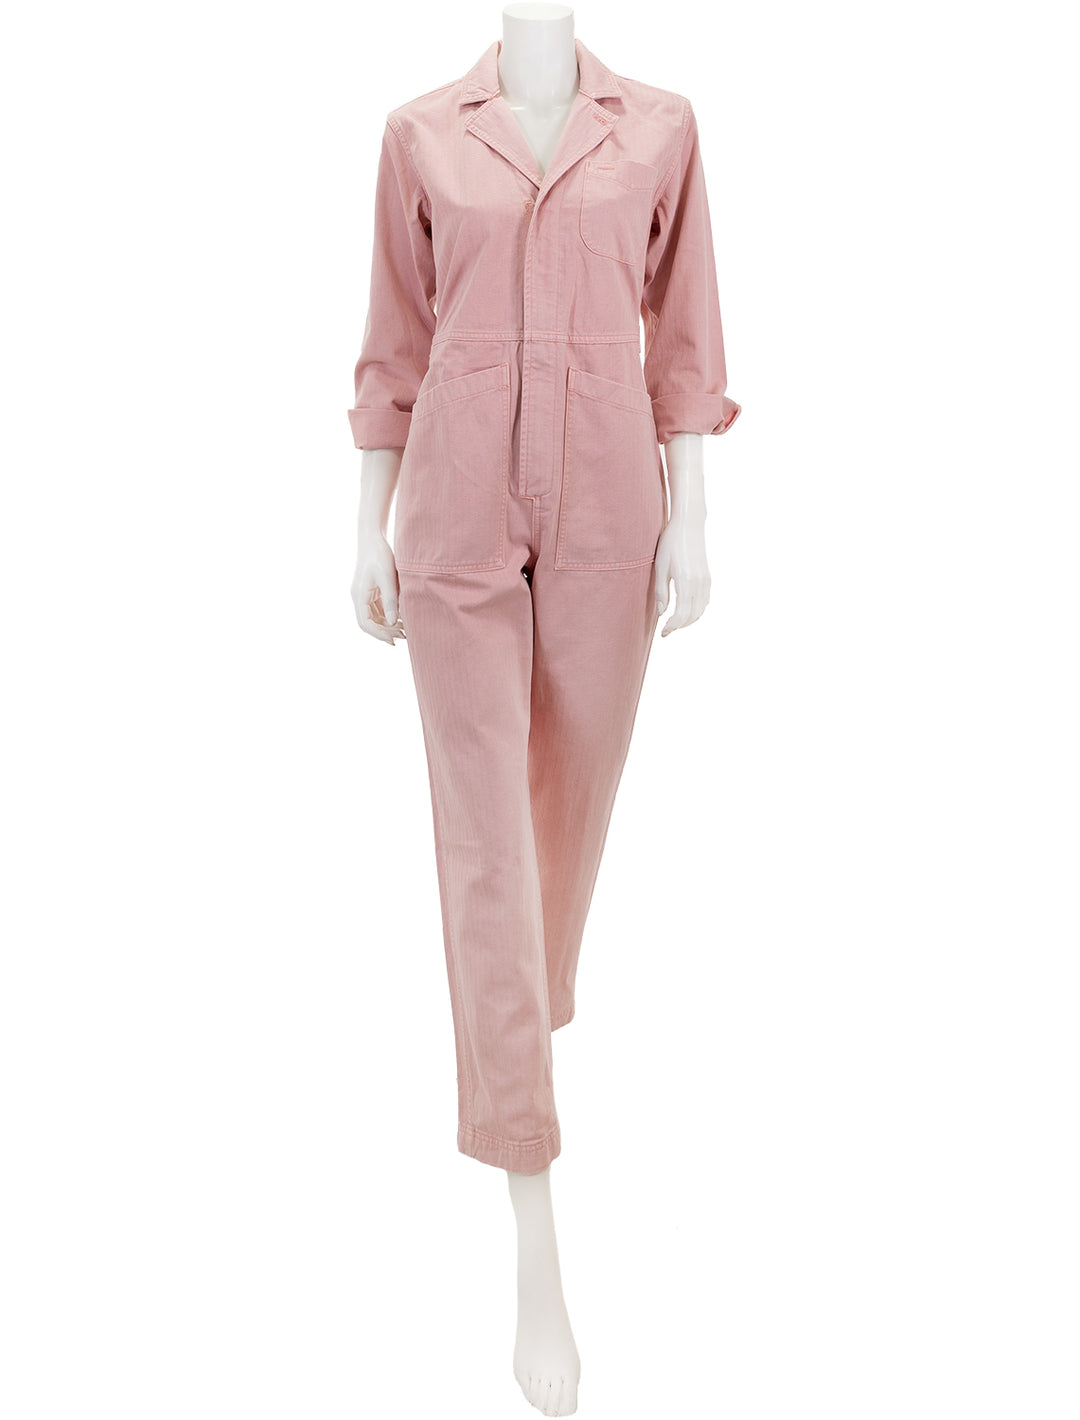 Front view of Alex Mill's standard jumpsuit in herringbone blush pink.